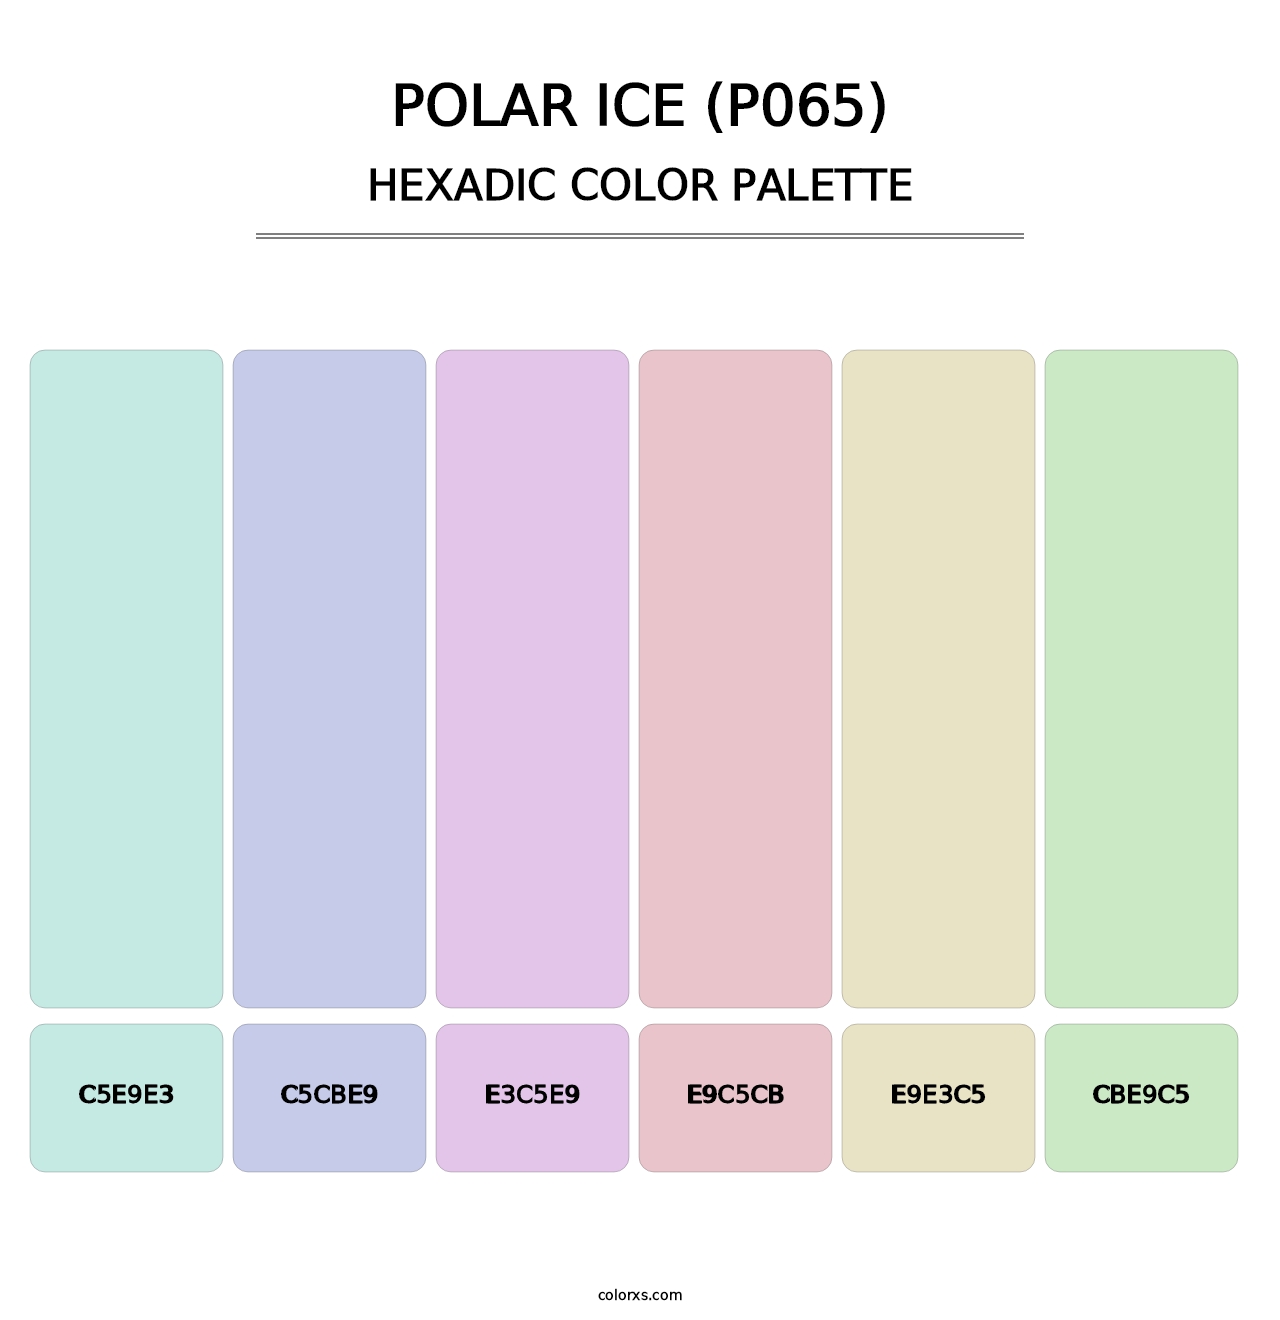 Polar Ice (P065) - Hexadic Color Palette